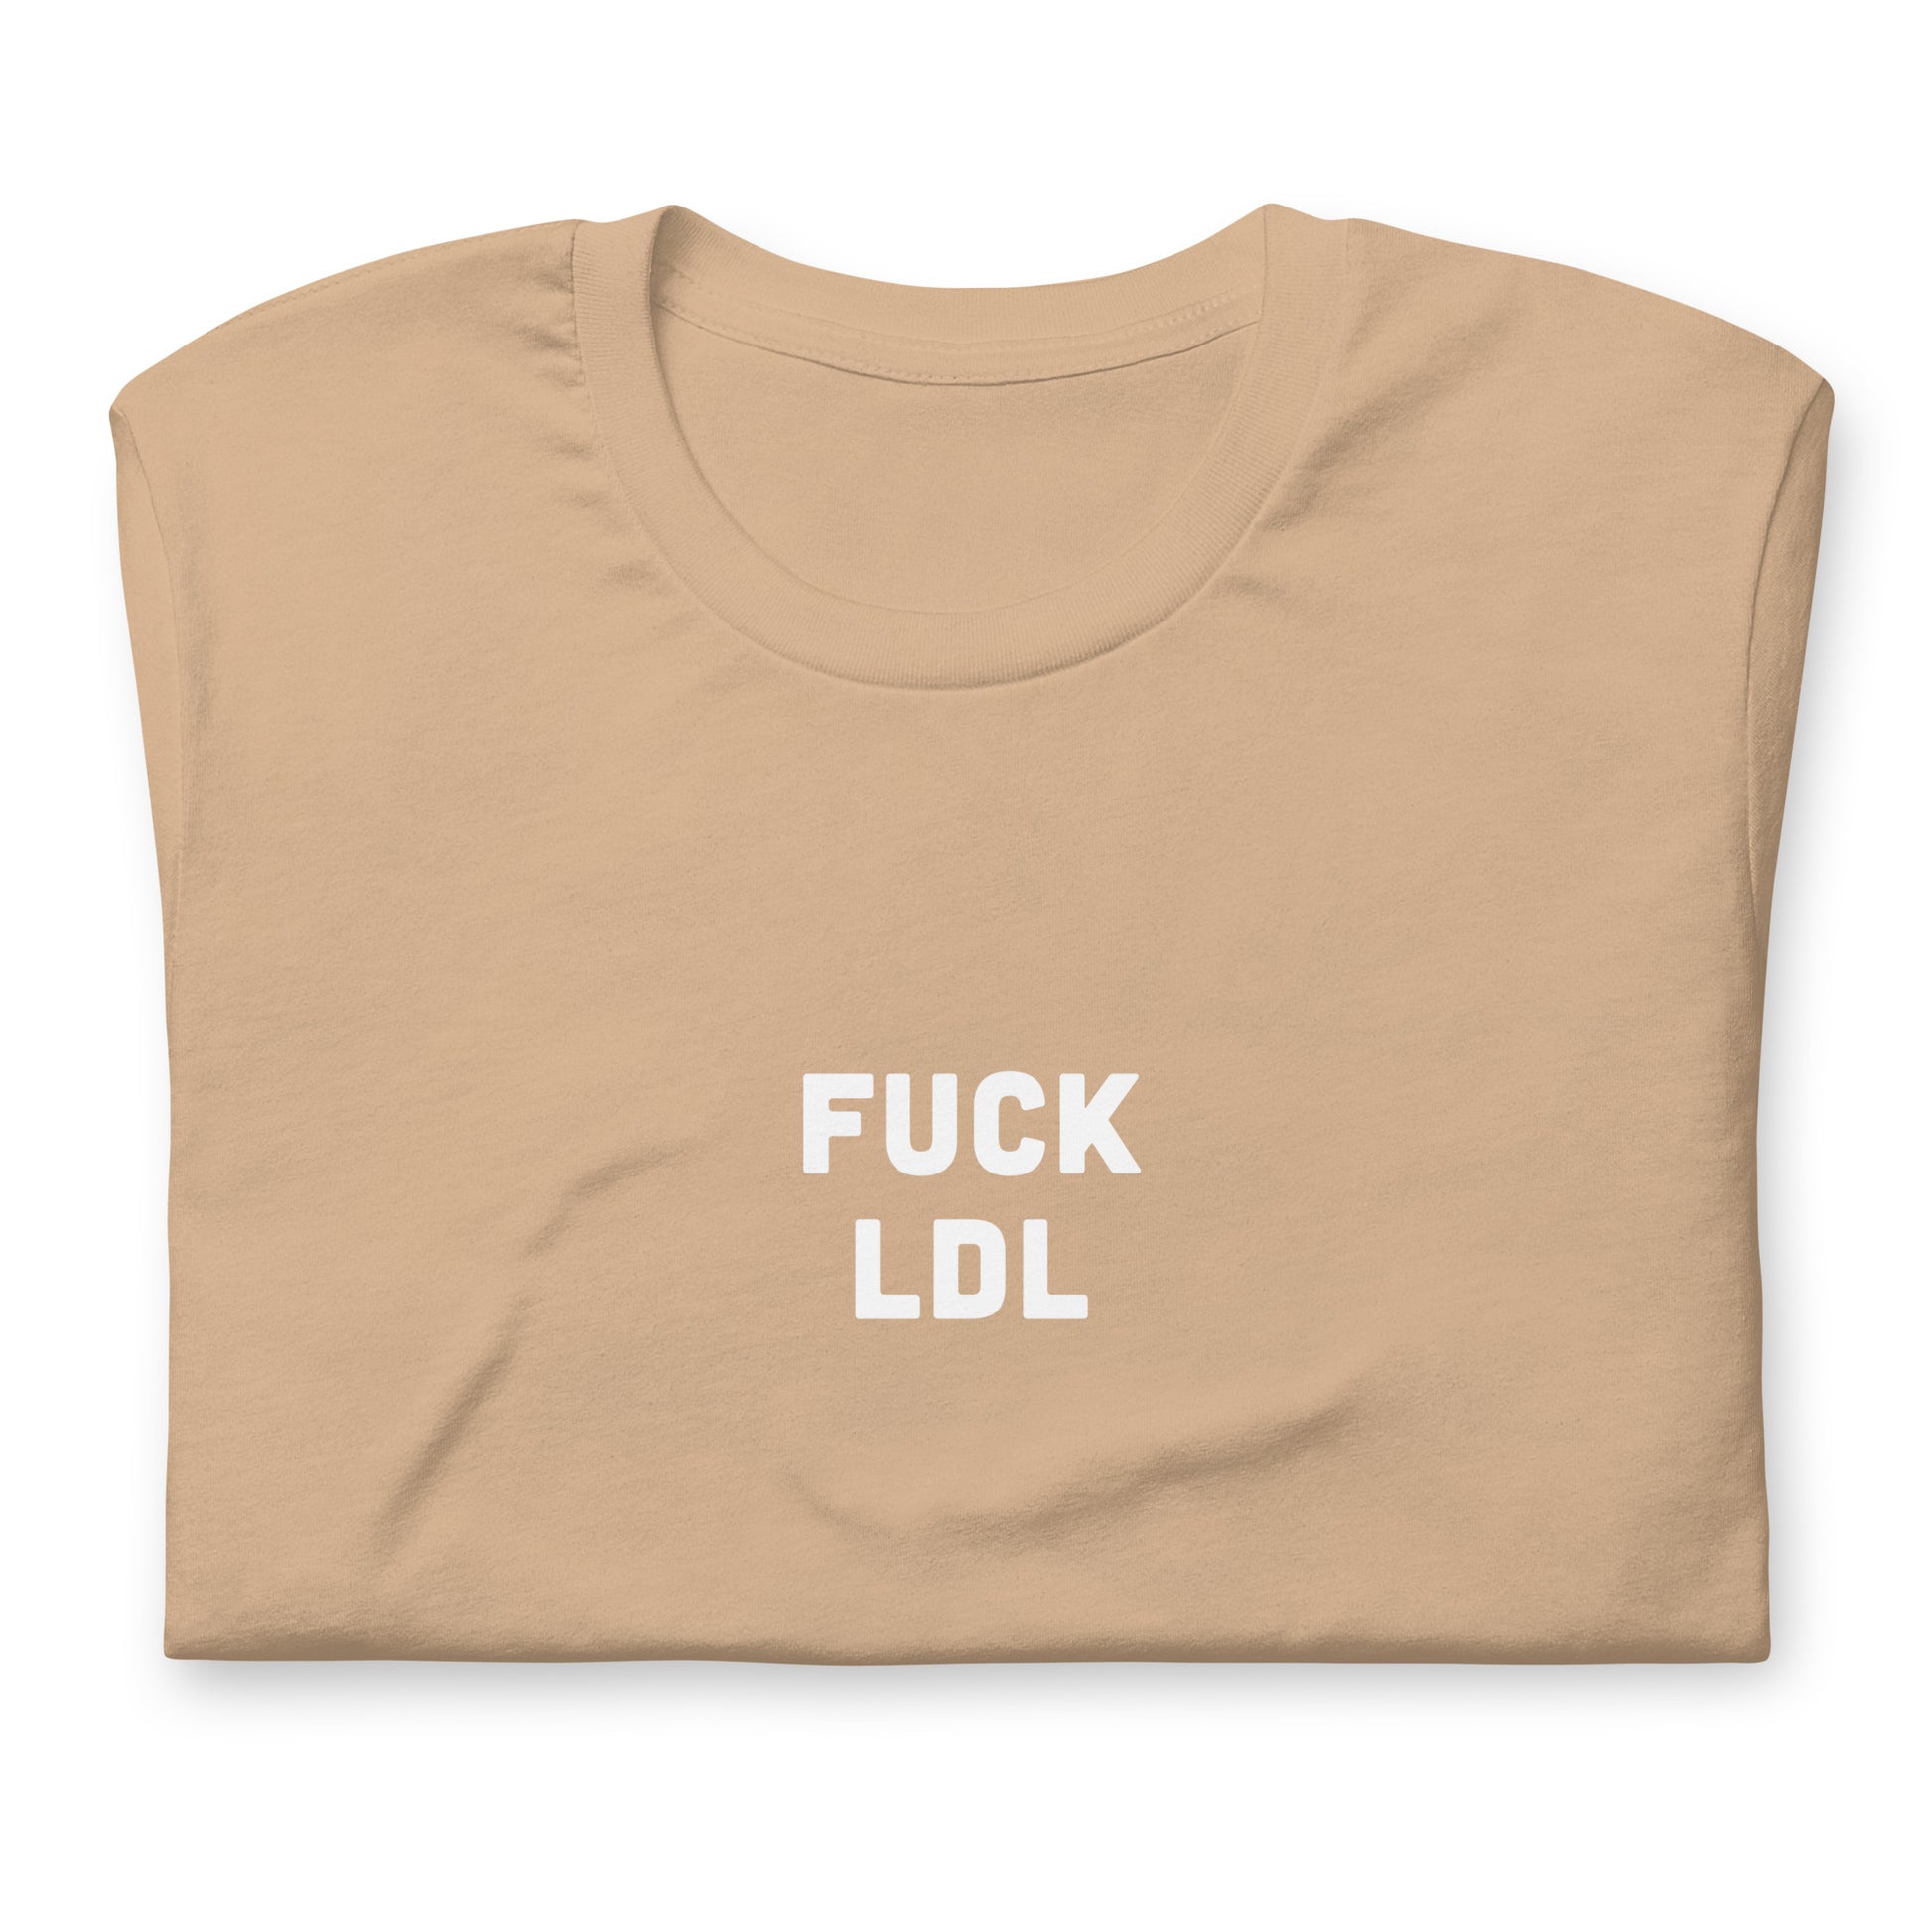 Fuck Ldl T-Shirt Size XL Color Forest